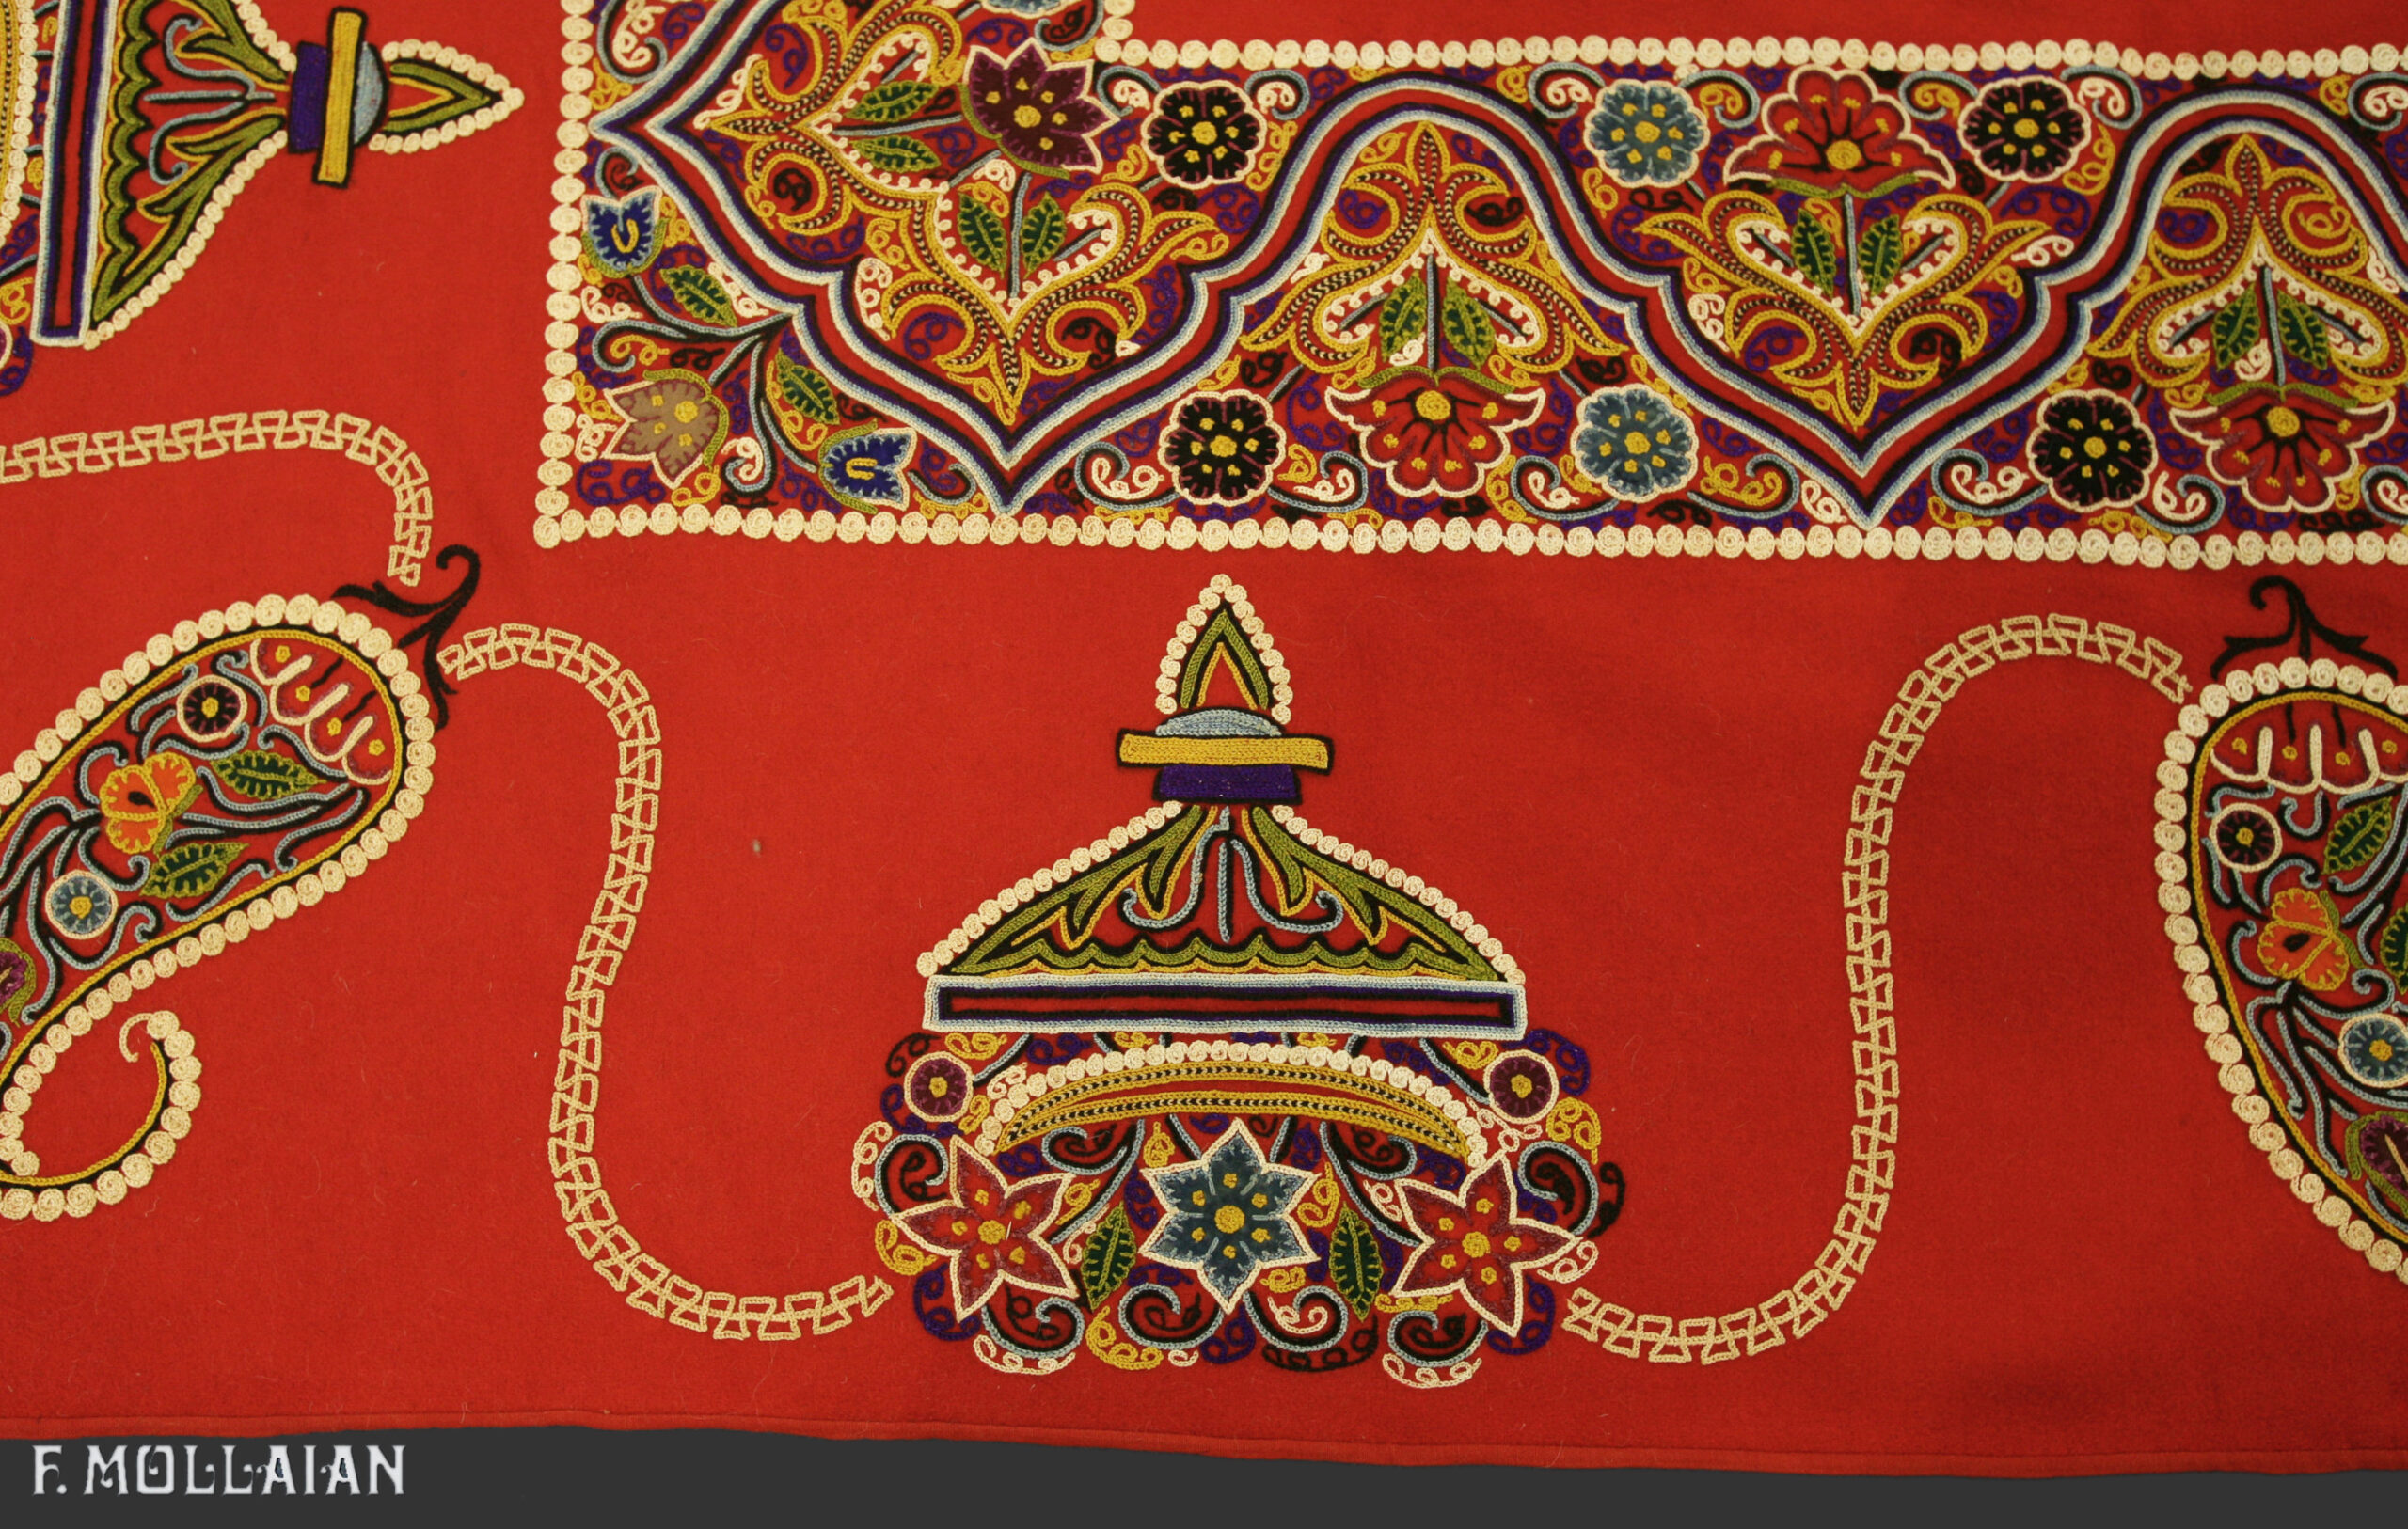 Textile Persan Antique Rashti-Duzi n°:52322737